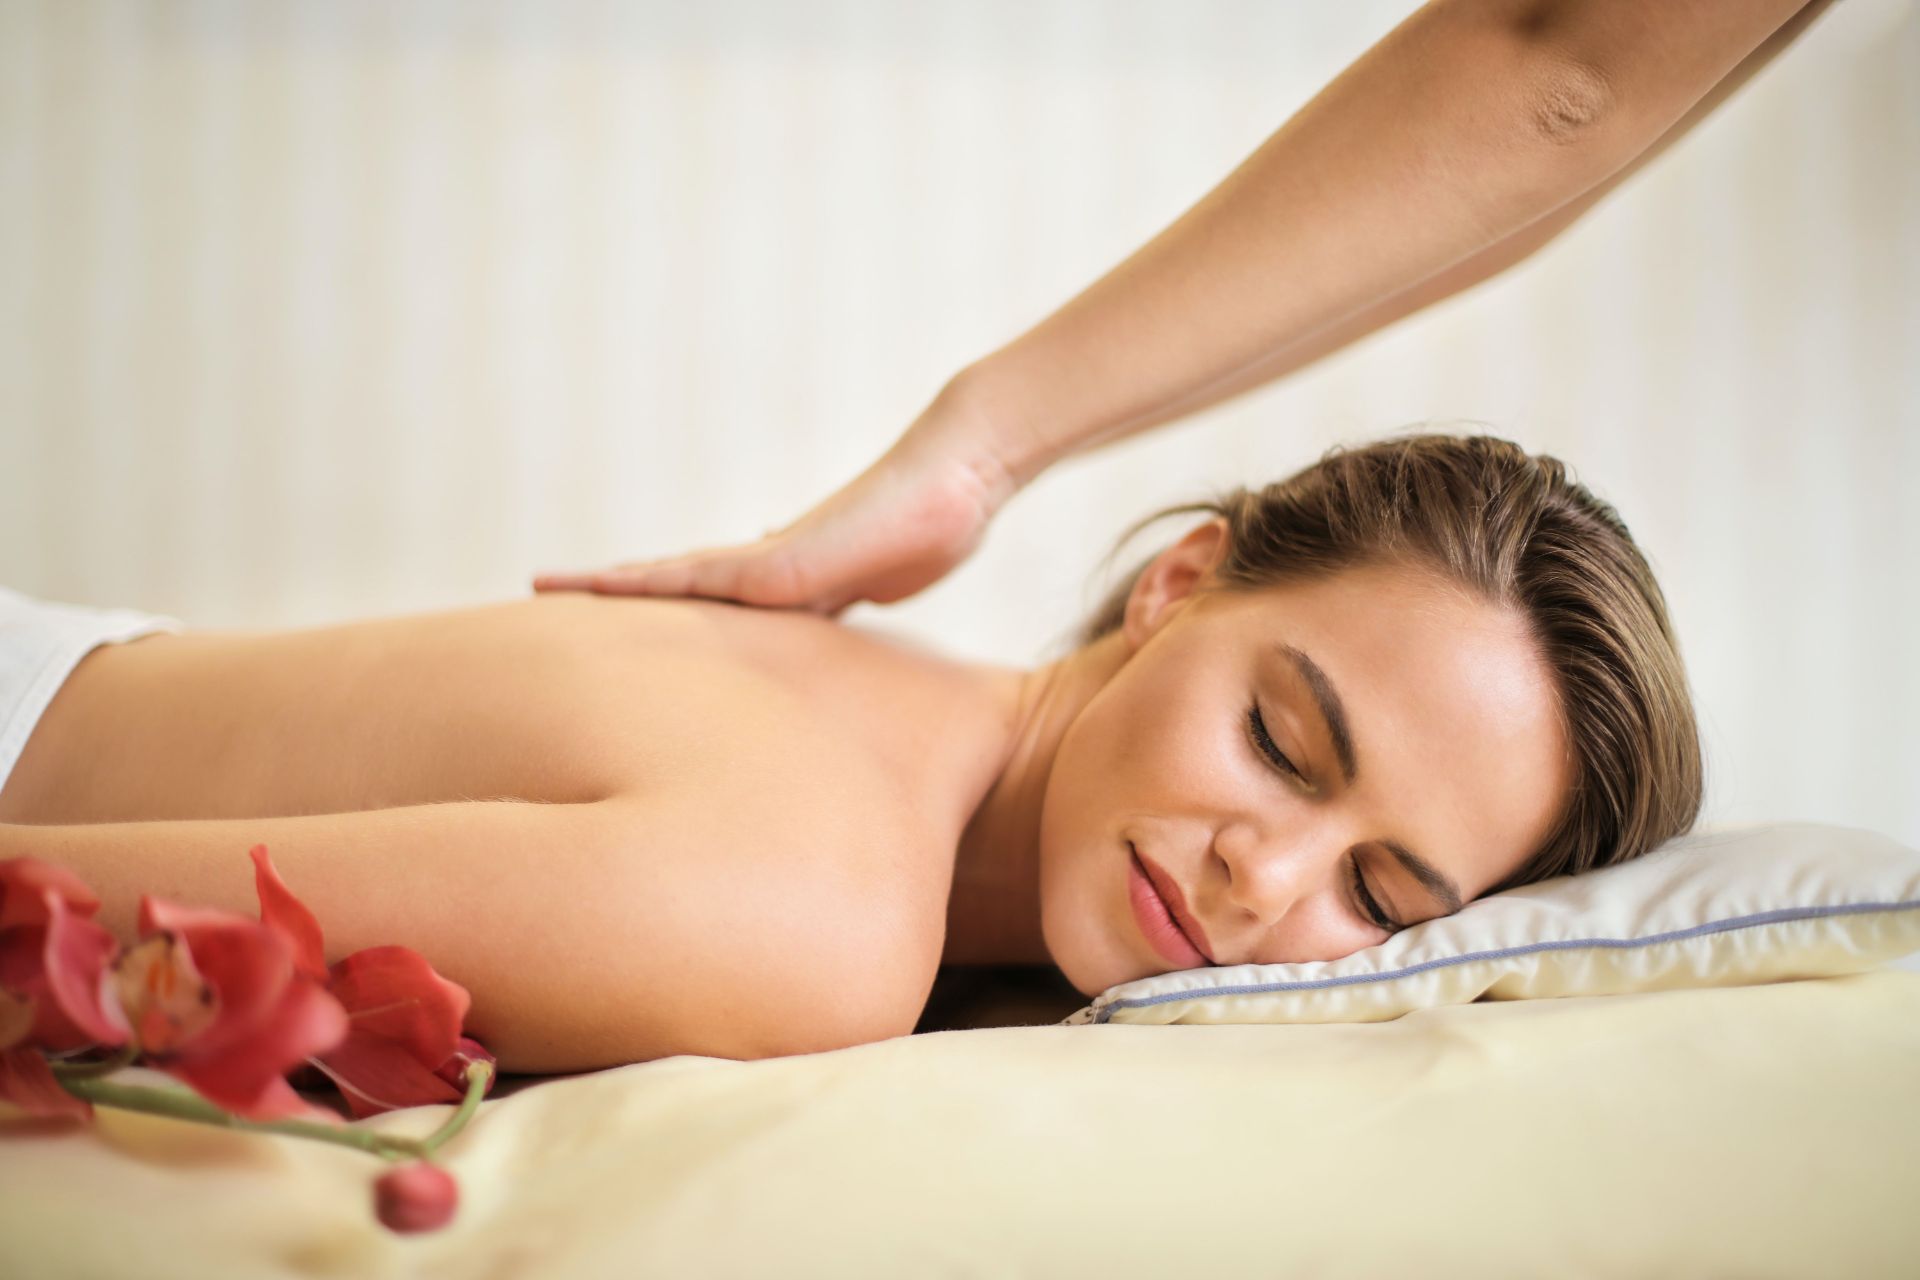 Woman in peace receiving massage